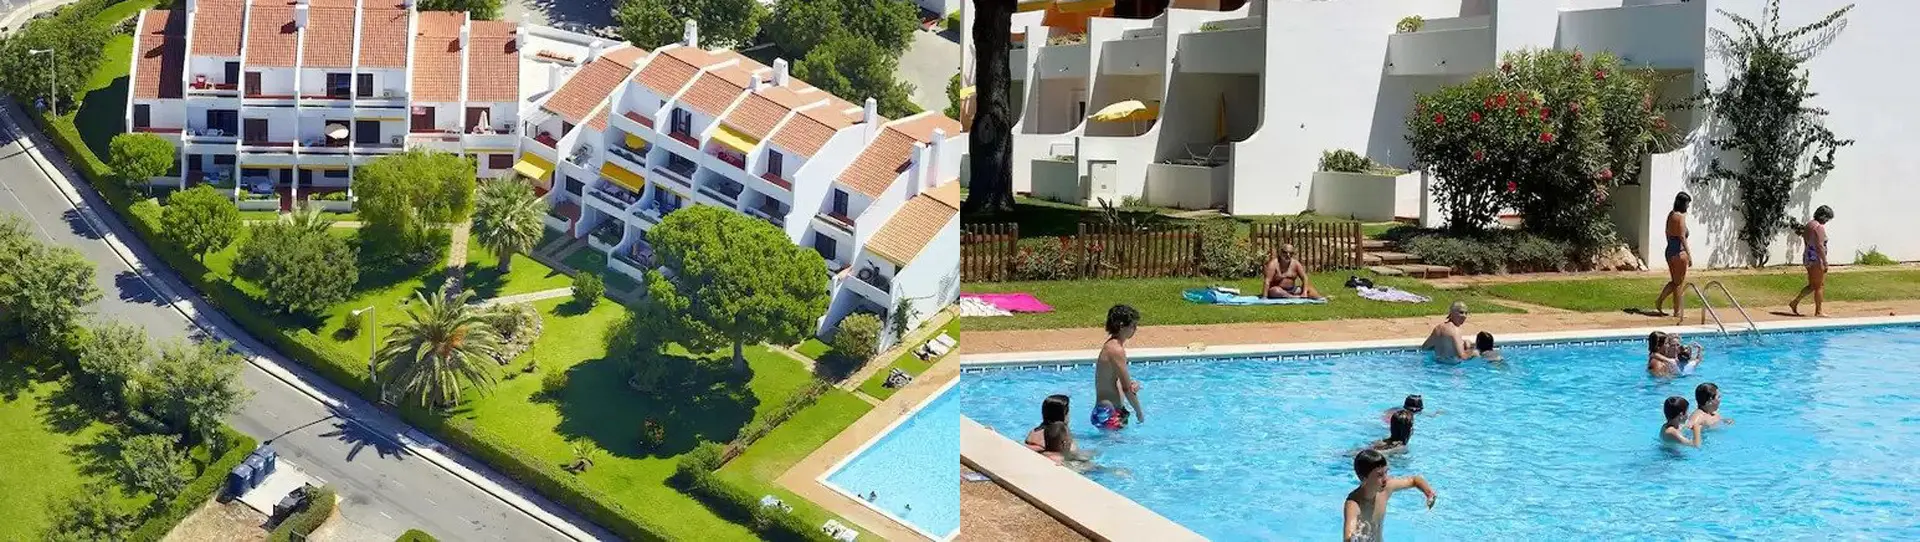 Portugal golf holidays - Alfarrobeiras Apartments Vilamoura - Photo 1